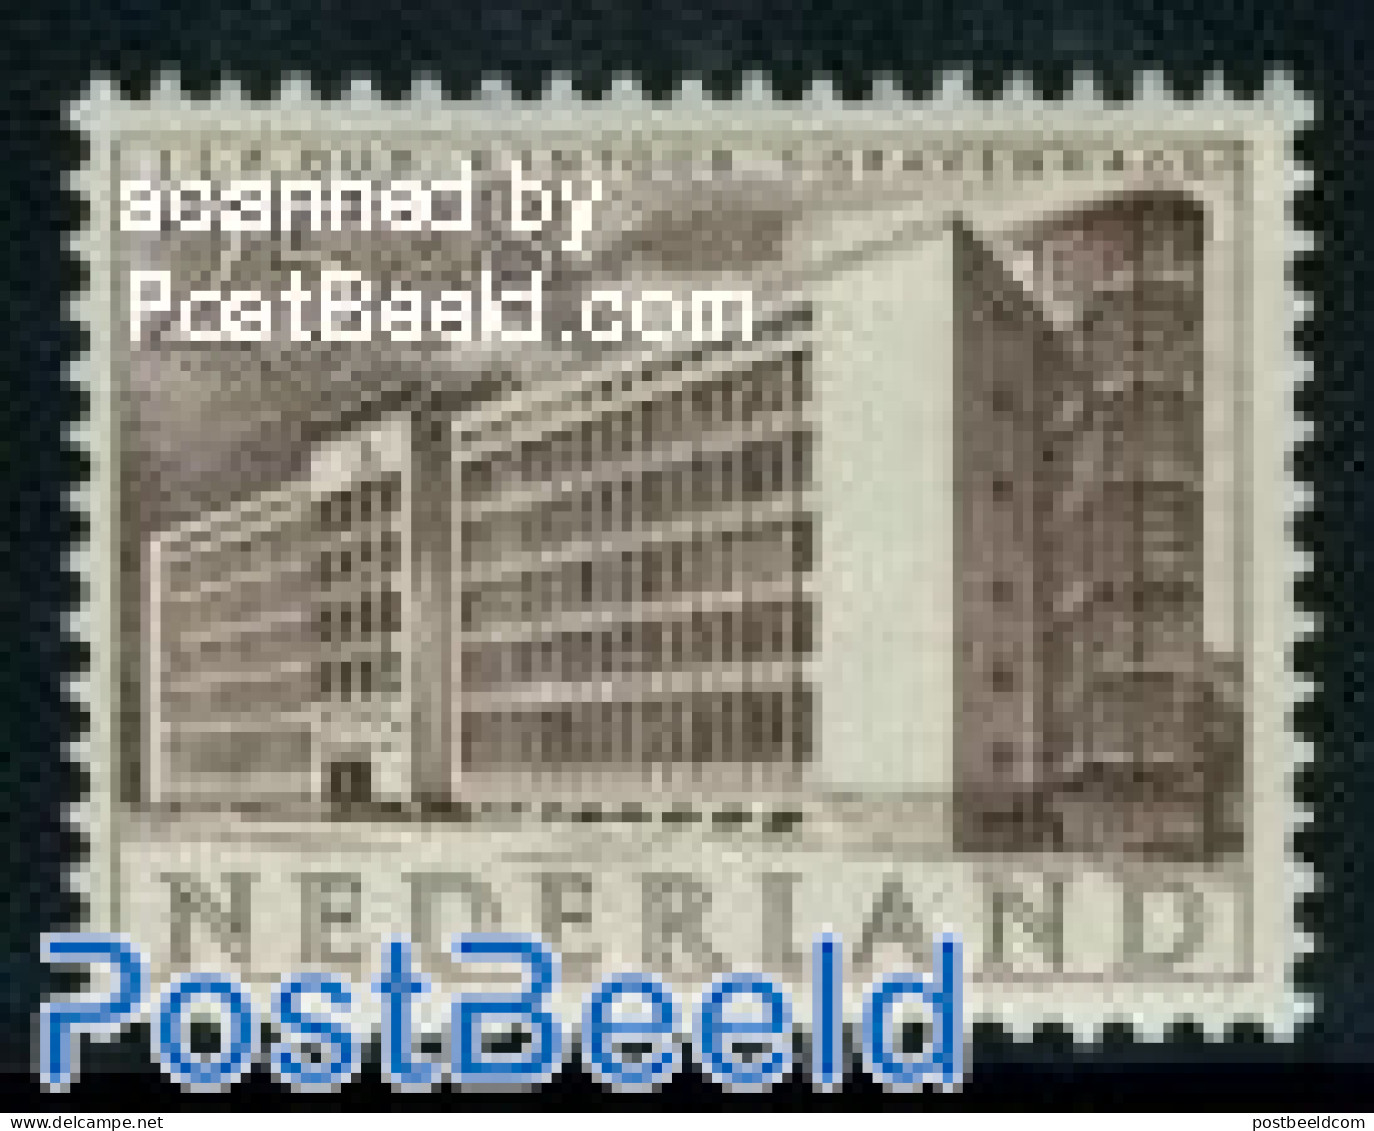 Netherlands 1955 25+8c, Den Haag, Stamp Out Of Set, Unused (hinged), Art - Modern Architecture - Ongebruikt